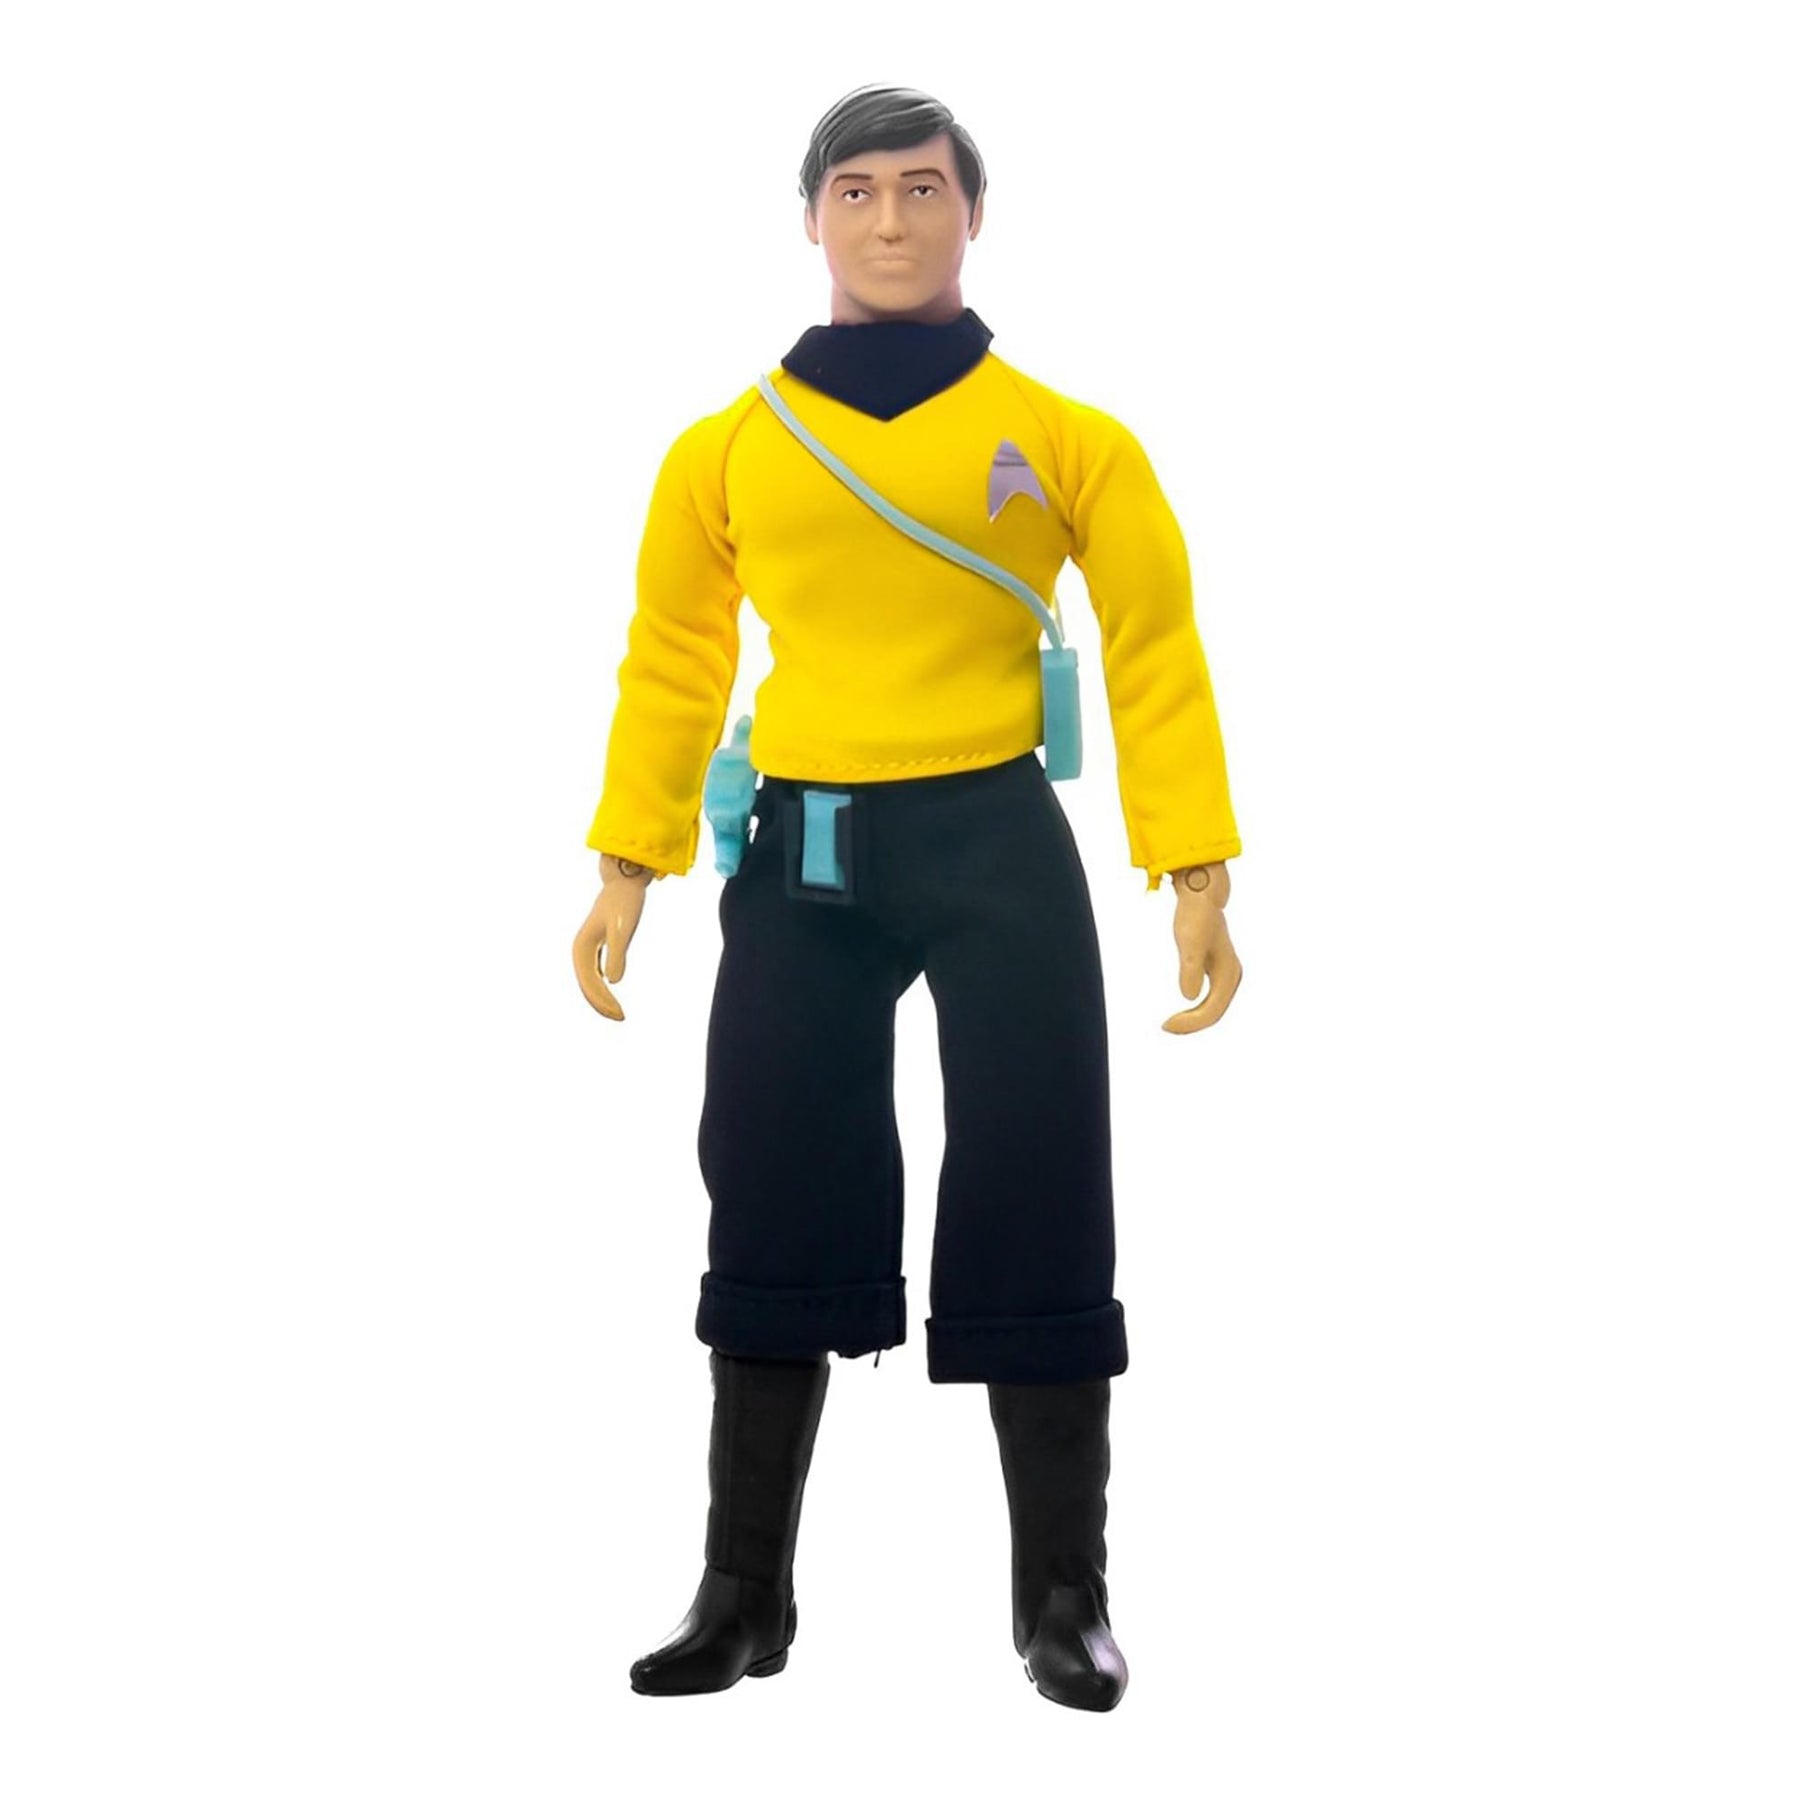 Mego Star Trek Chekov Action Figure 8"